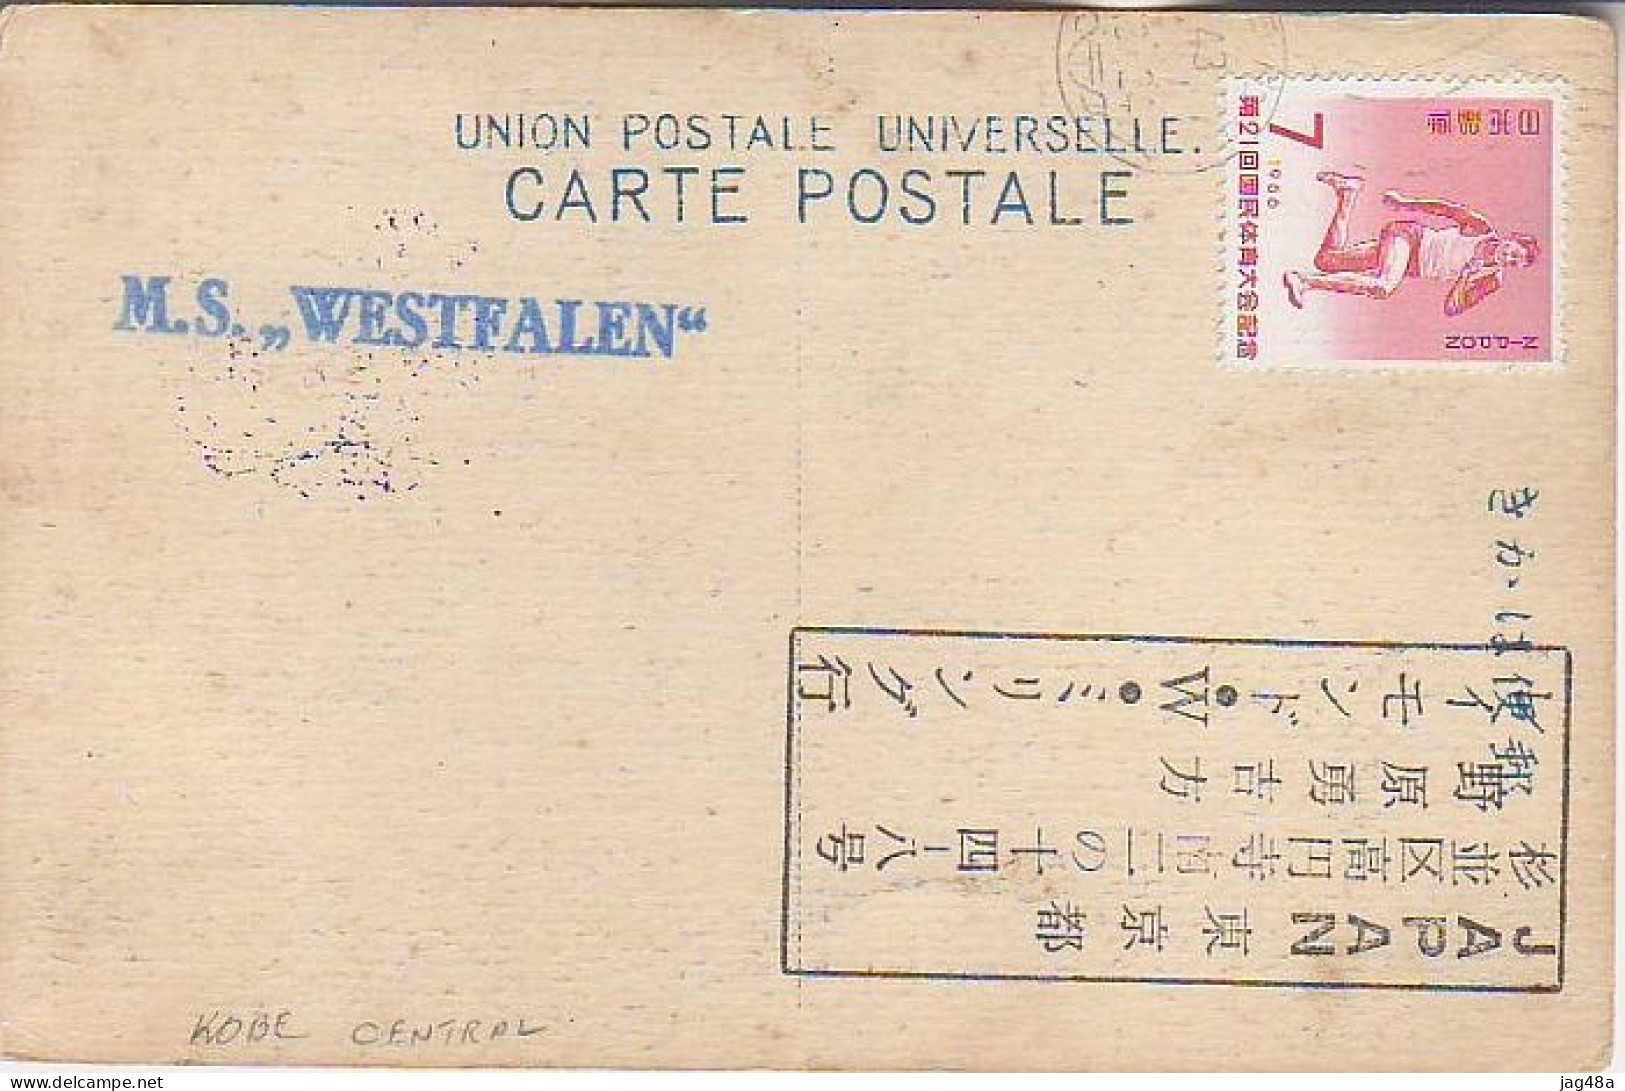 JAPAN. 1966/Kobe-Central, Picture-postcard/tranisit M.S. "WESTFALEN". - Covers & Documents